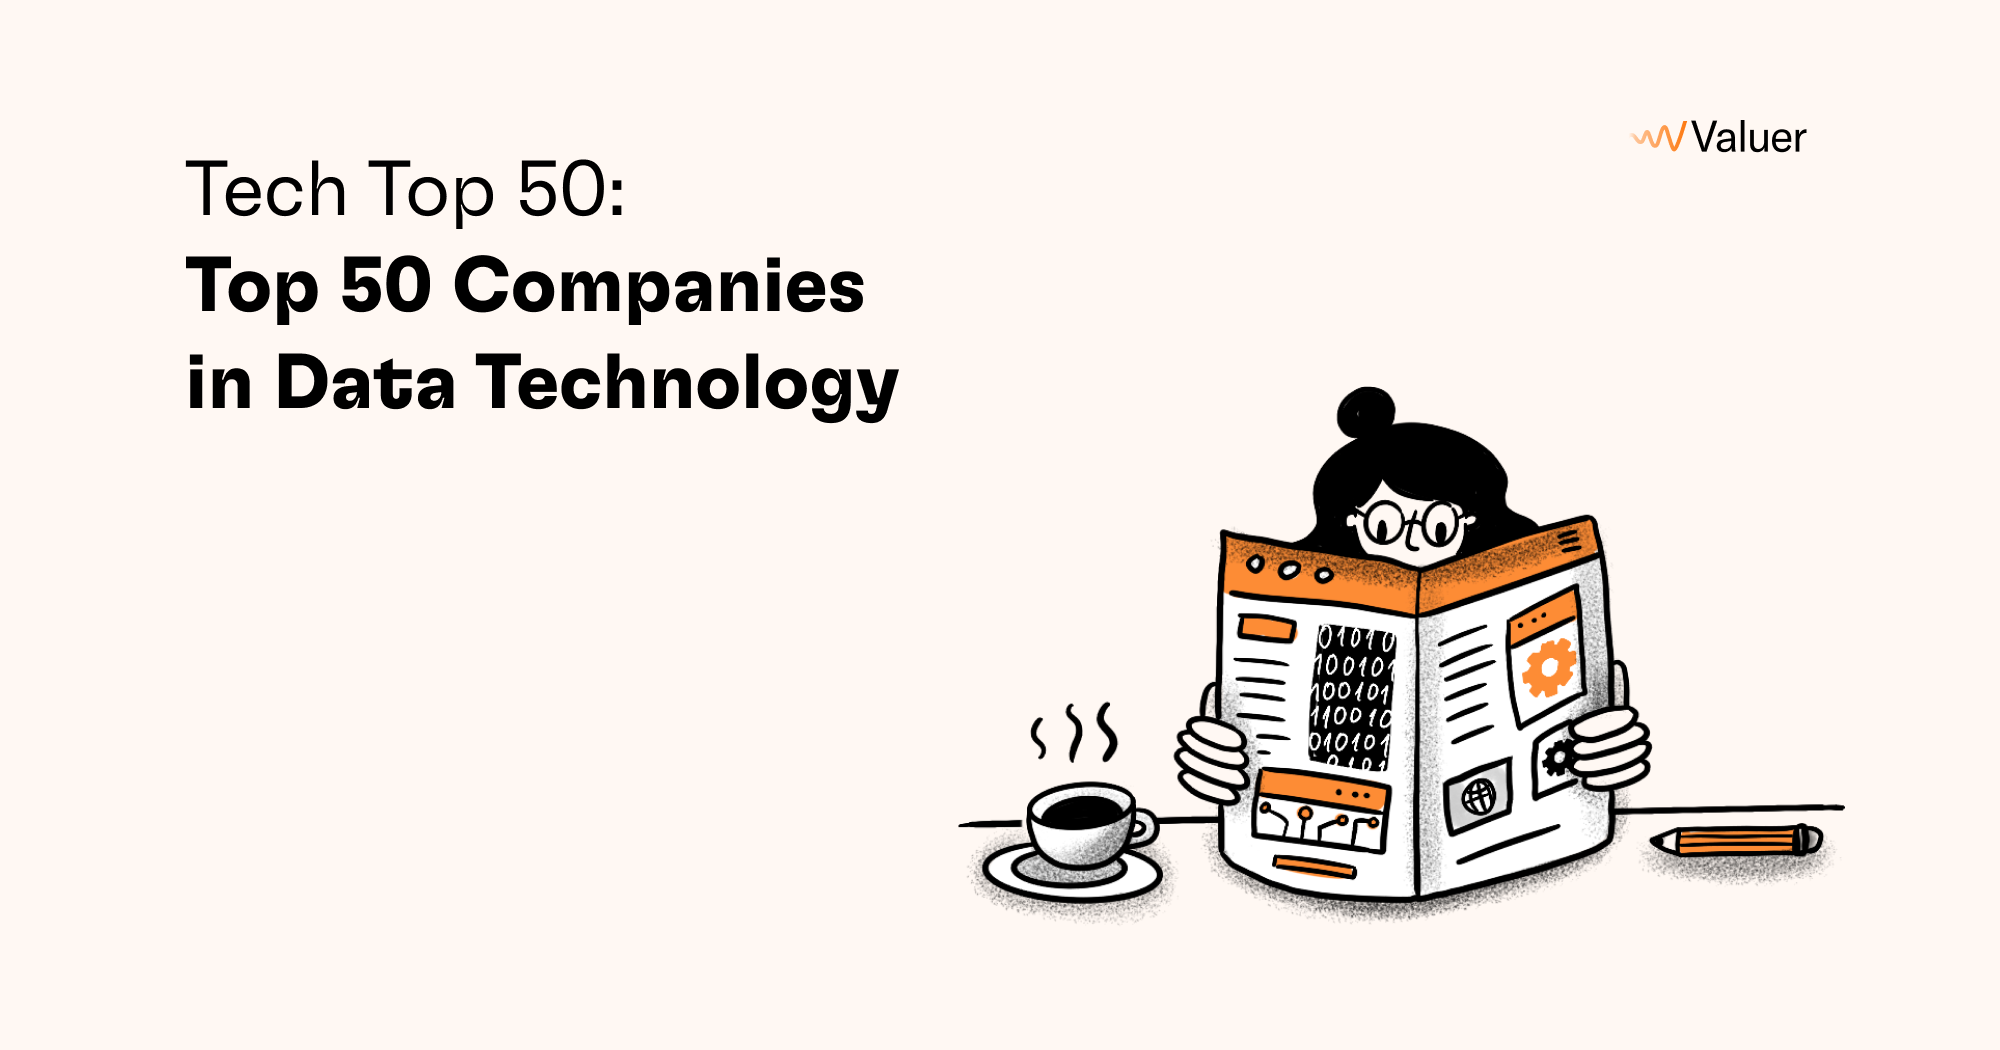 Tech Top 50 Top Companies in Data Technology